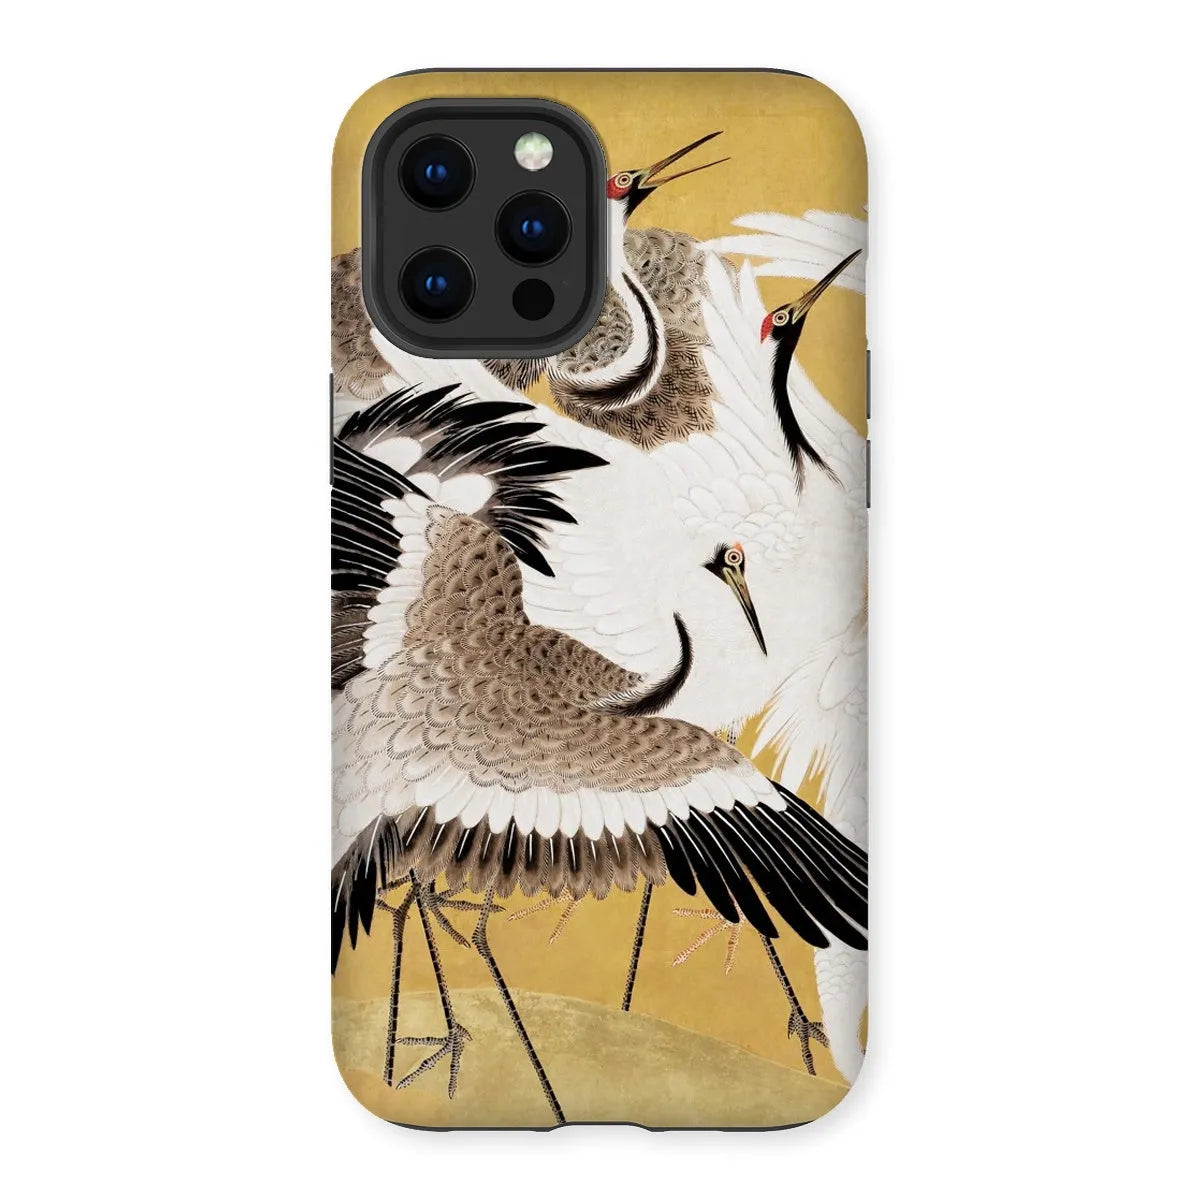 Flock Of Cranes Japanese Bird Art Phone Case - Ishida Yūtei - Iphone 12 Pro Max / Matte - Mobile Phone Cases